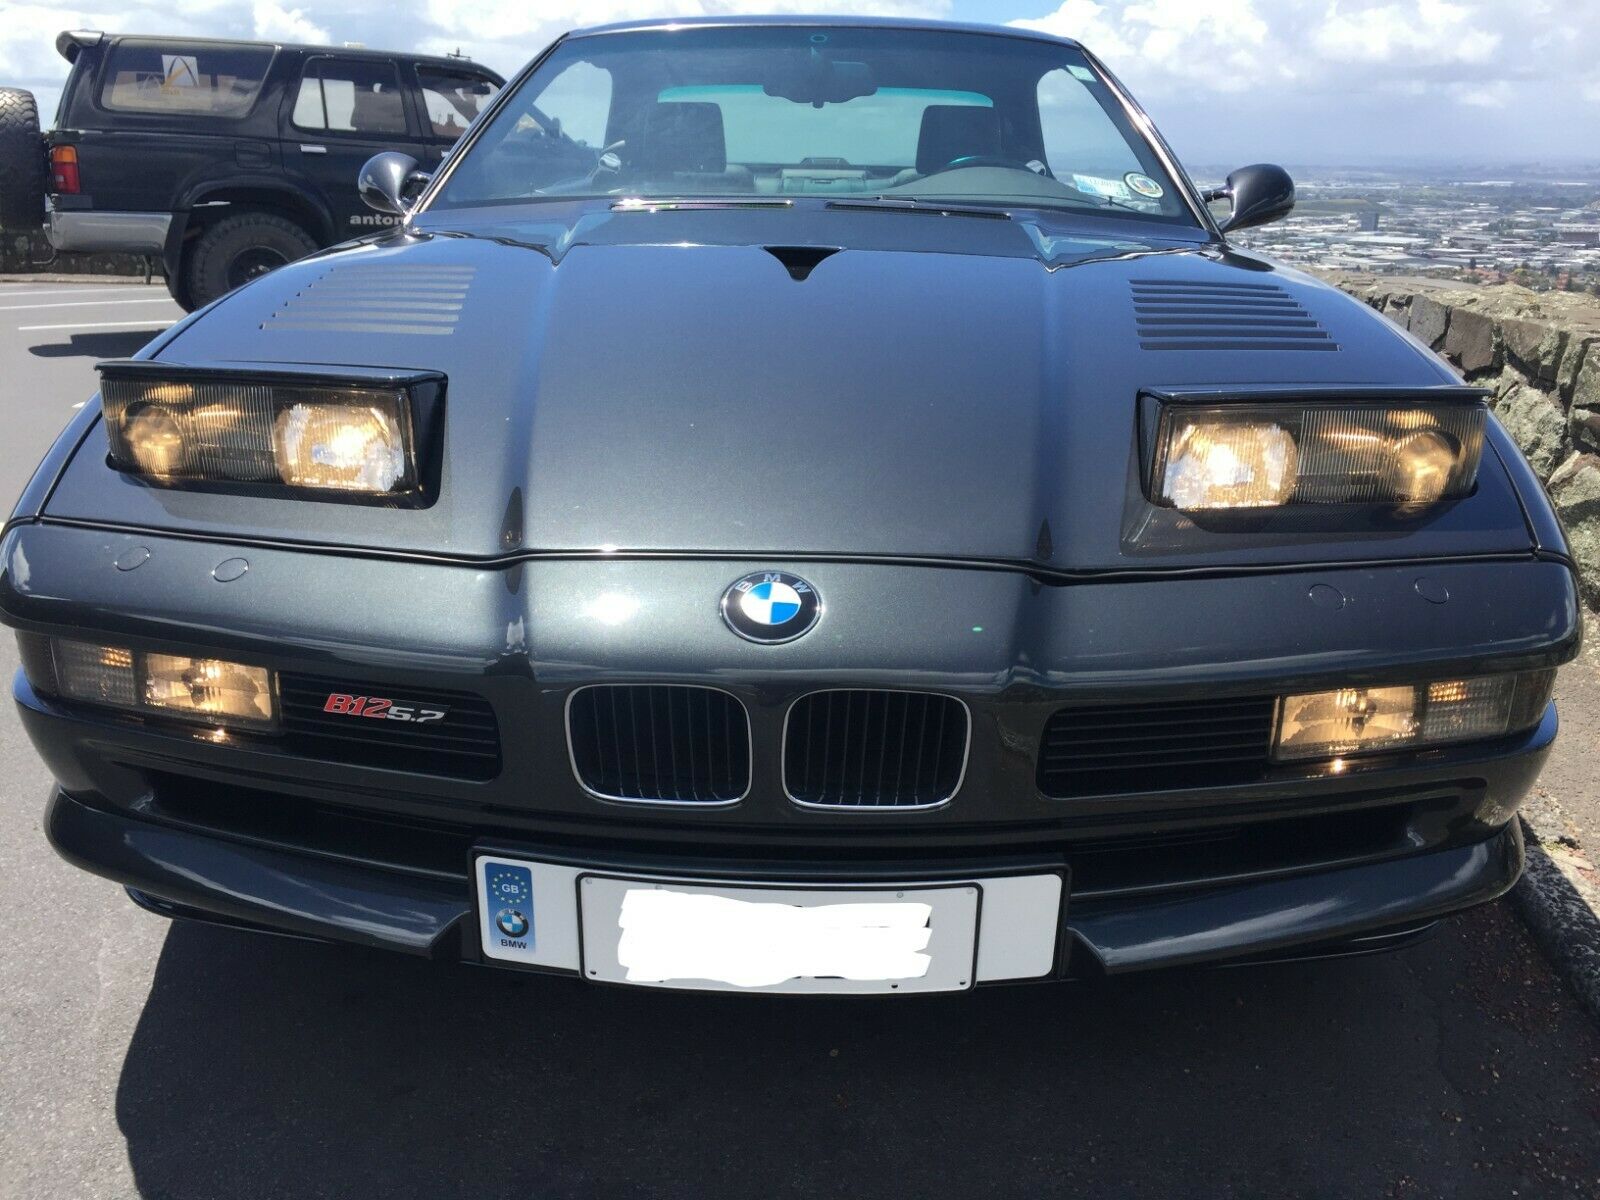 حفرة إرنست شاكلتون تقصر  Ritkaságához méltó áron eladó a 90-es évek egyik legkomolyabb Alpina BMW-je  | Vezess